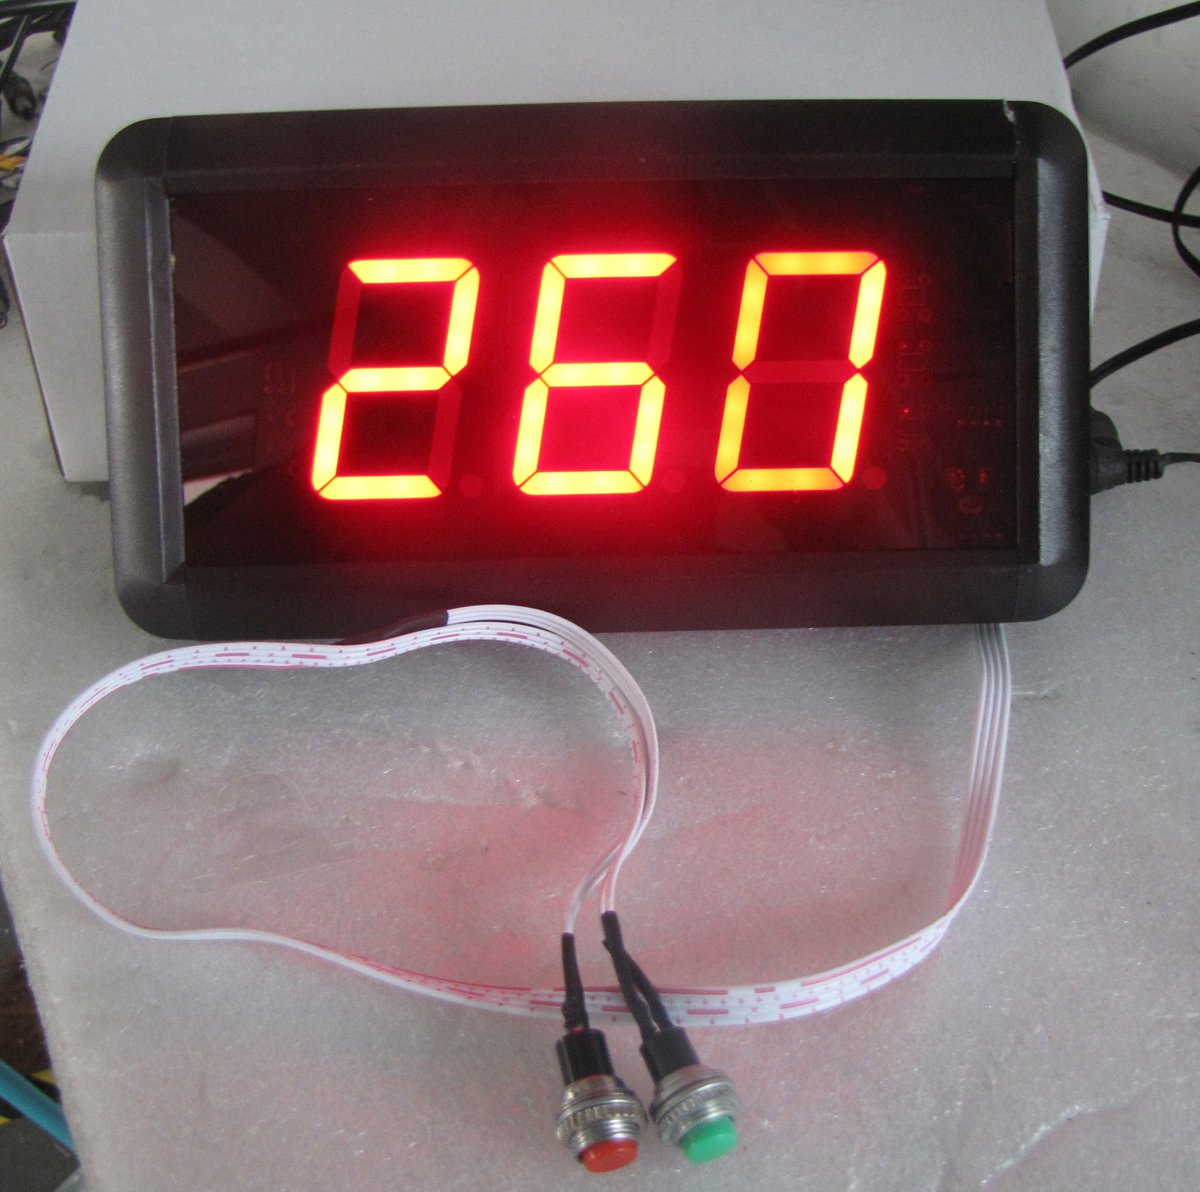 Large LED Countdown Timer: large LED digital wall clock time display1200 x 1192